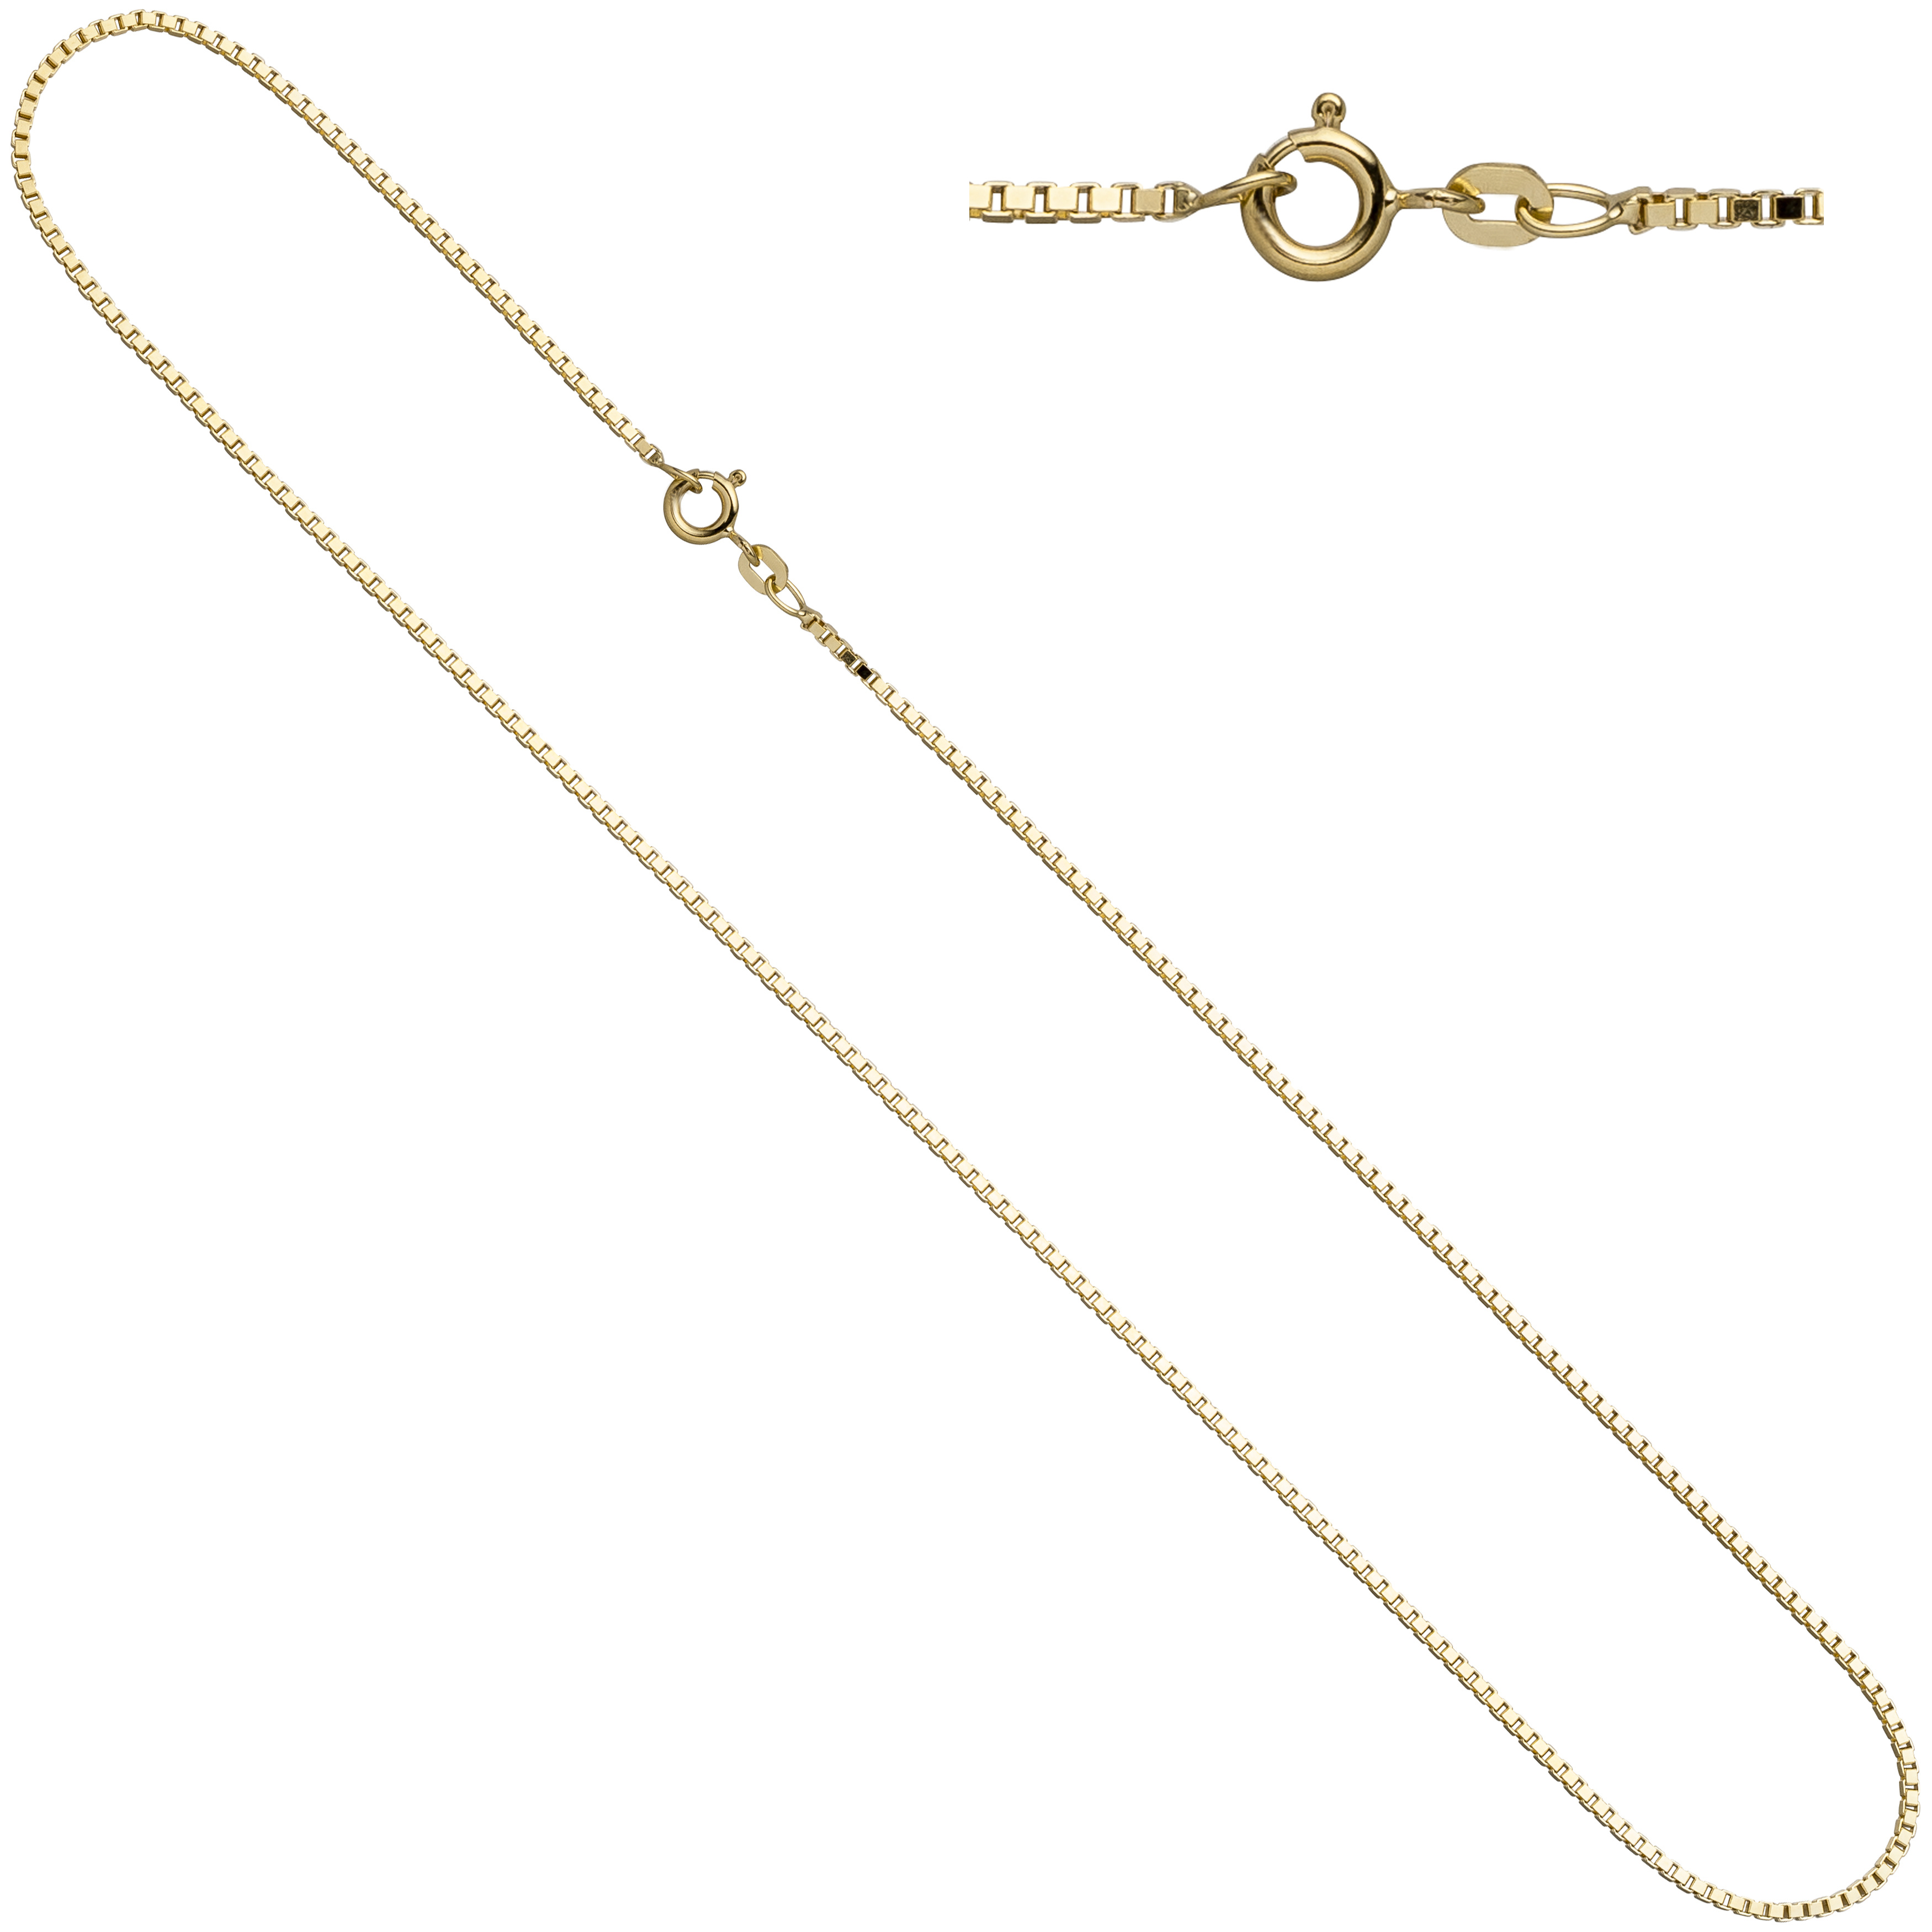 Venezianerkette 333 Gelbgold 1,0 mm 38 cm Gold Kette Halskette Federring